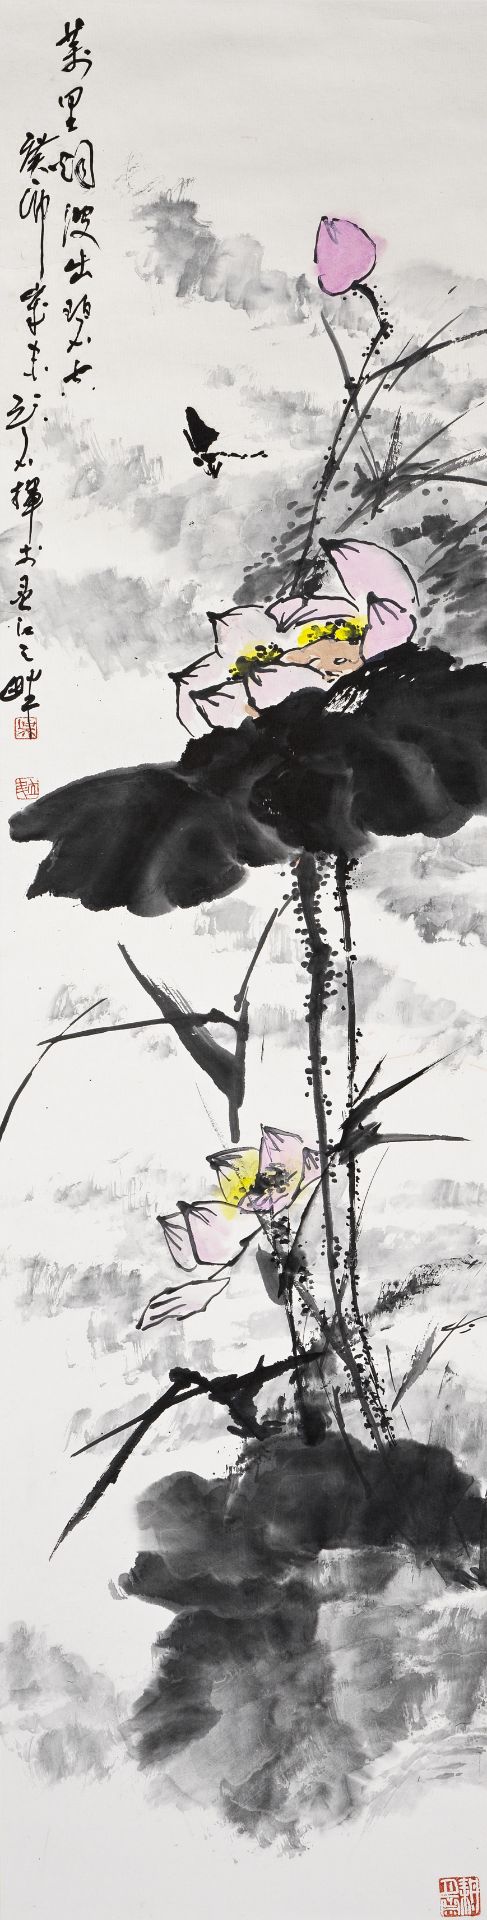 WU LIMIN (1939-) Lotus pond